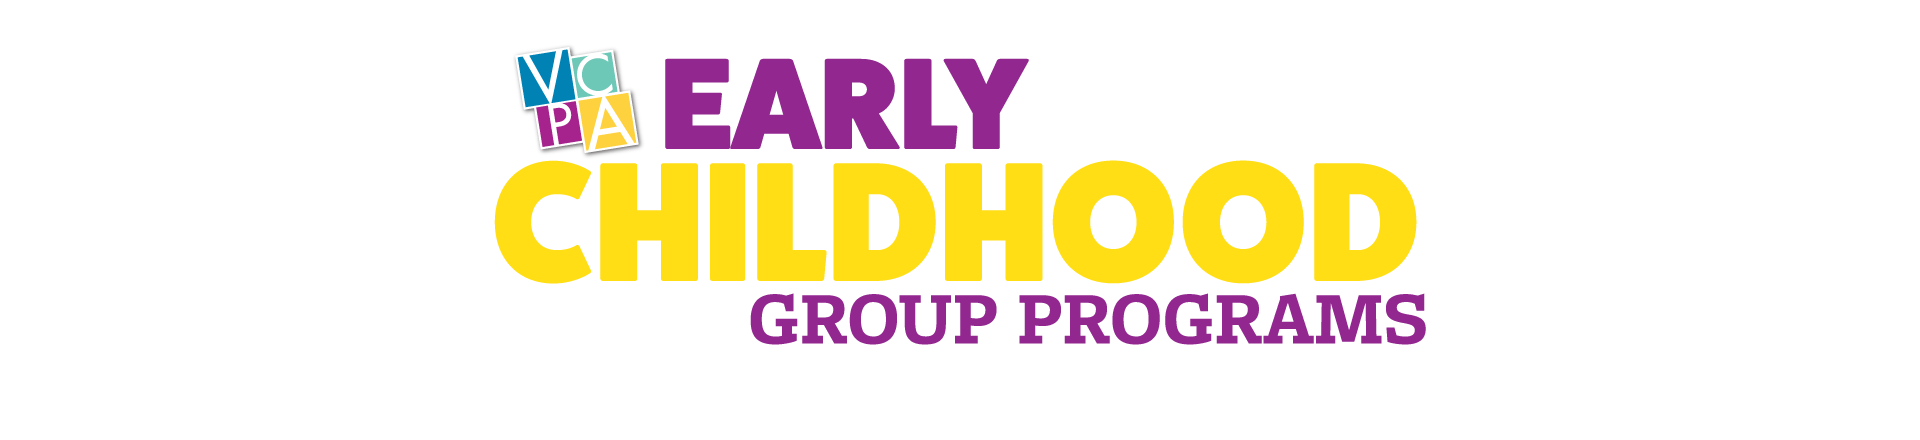 Early Childhood Group Programs